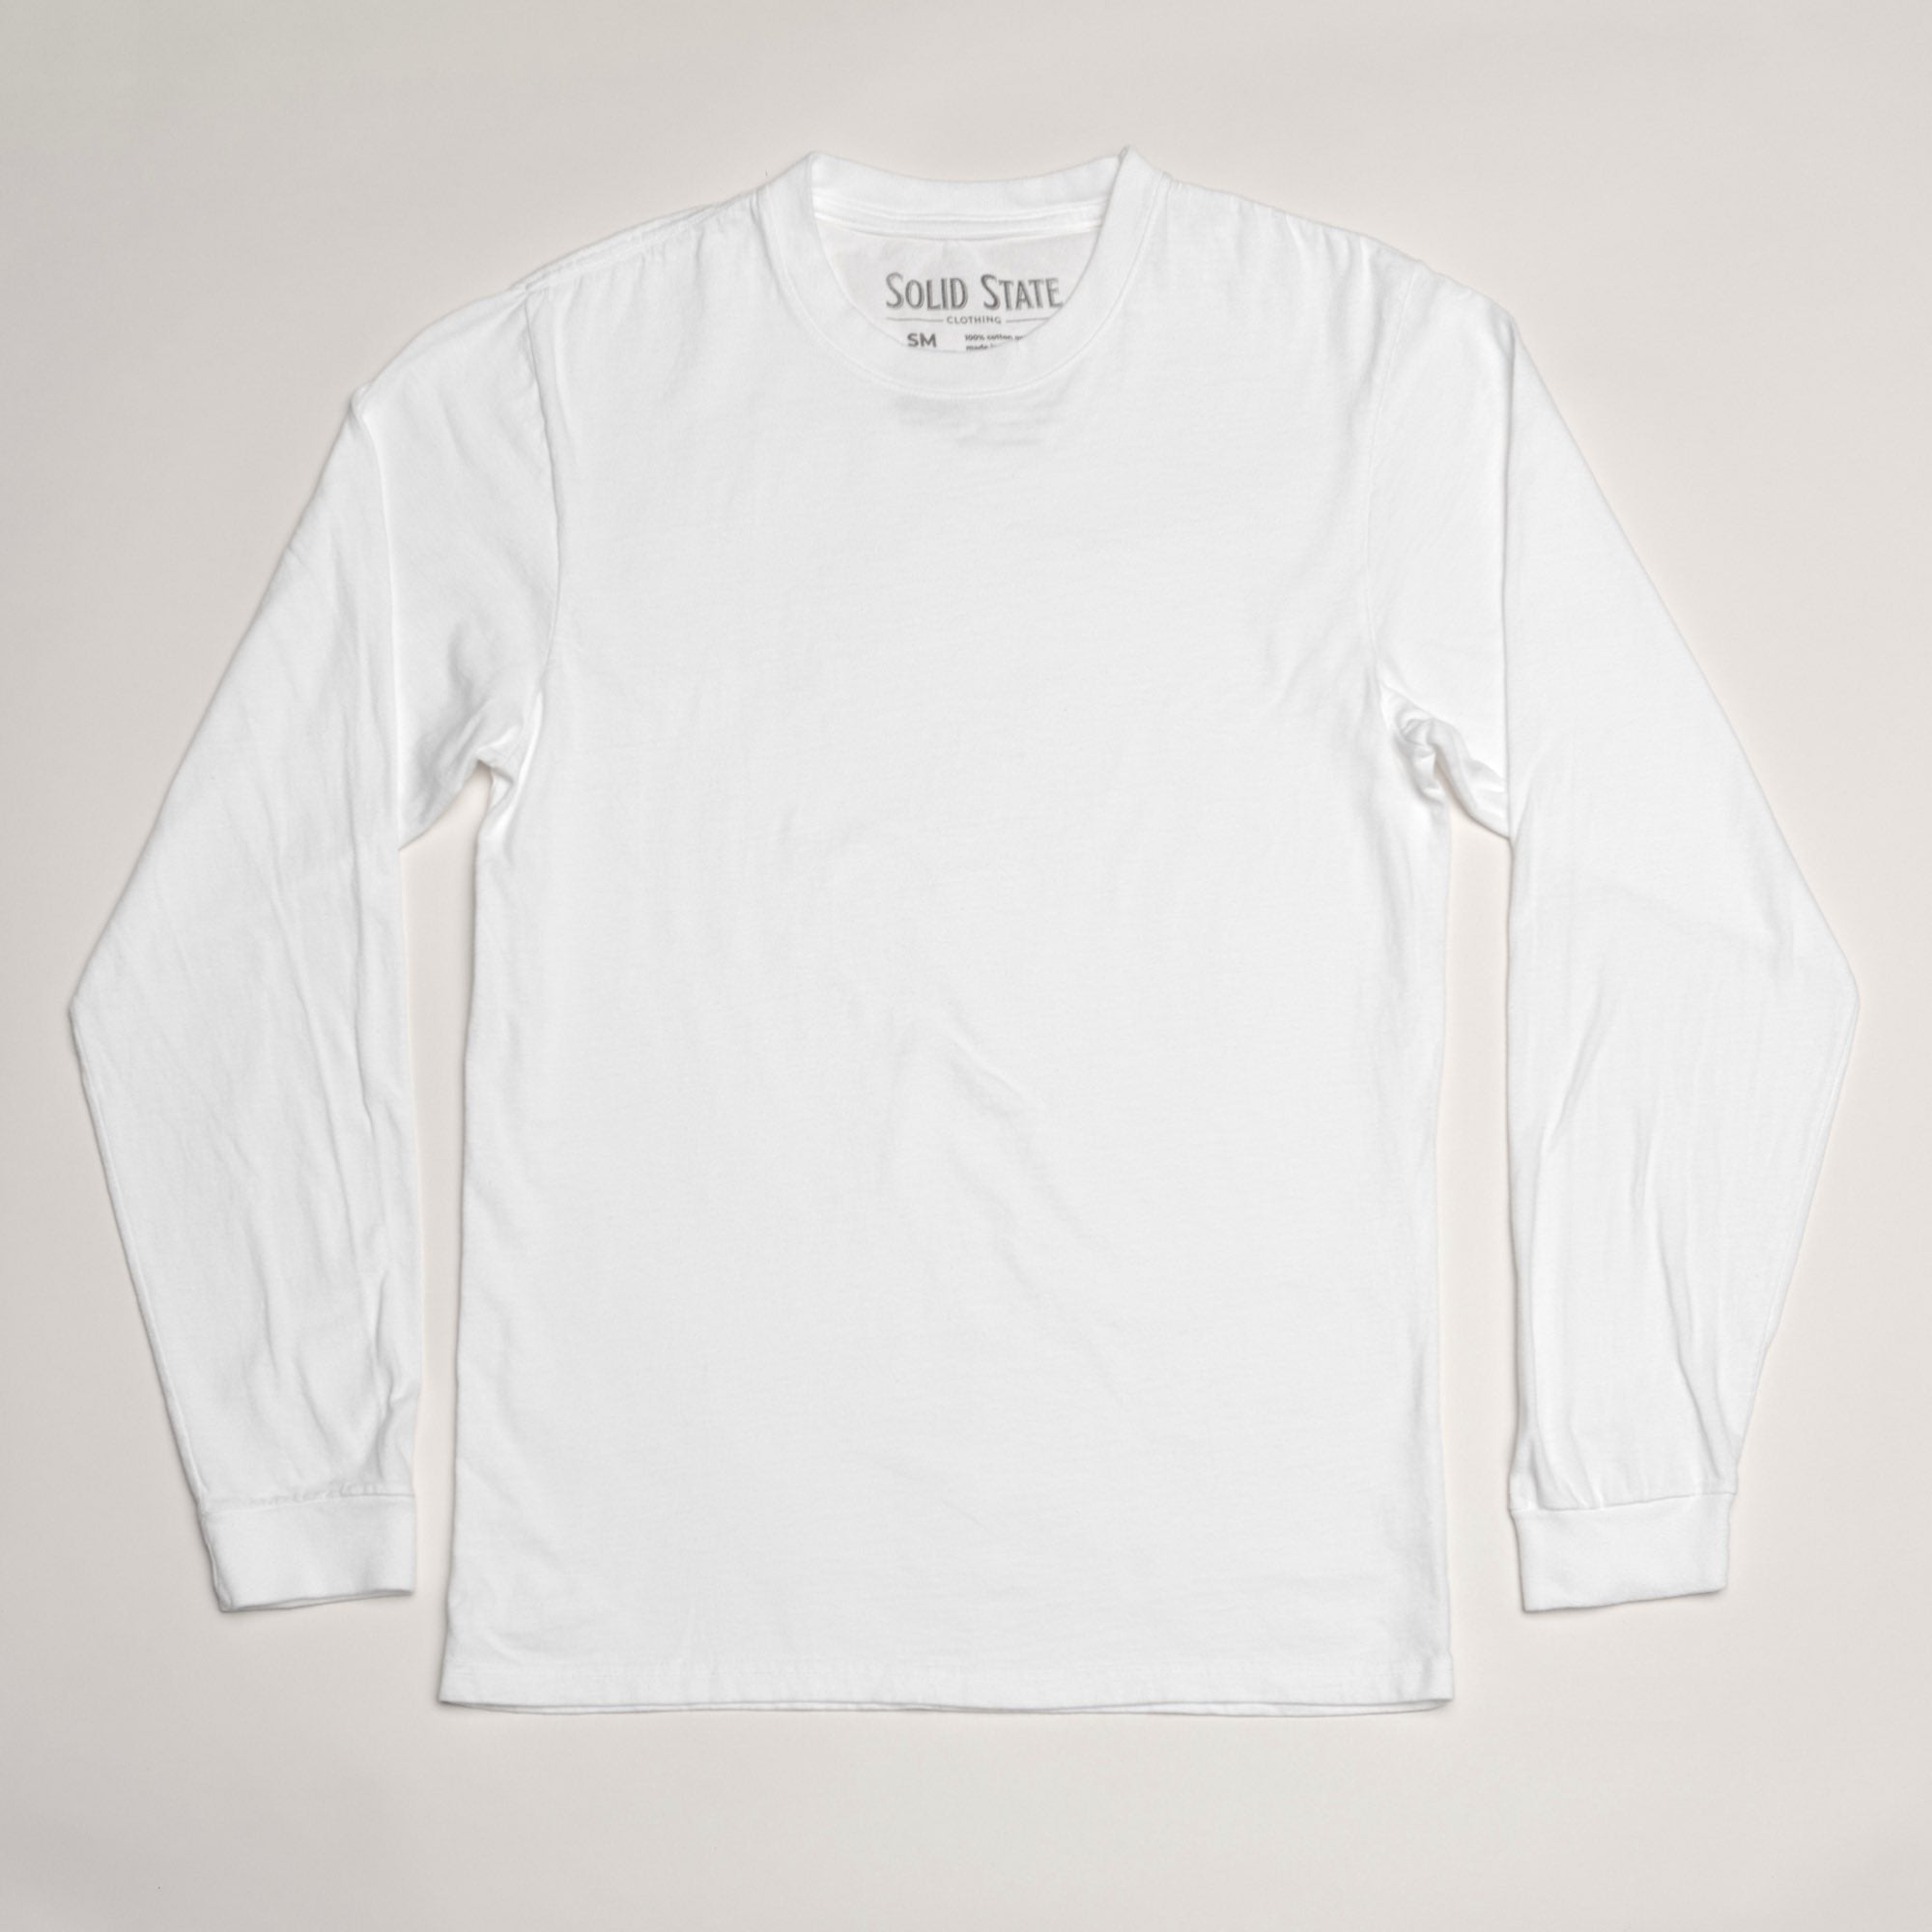 North Carolina Cotton Long Sleeve T-Shirt - White